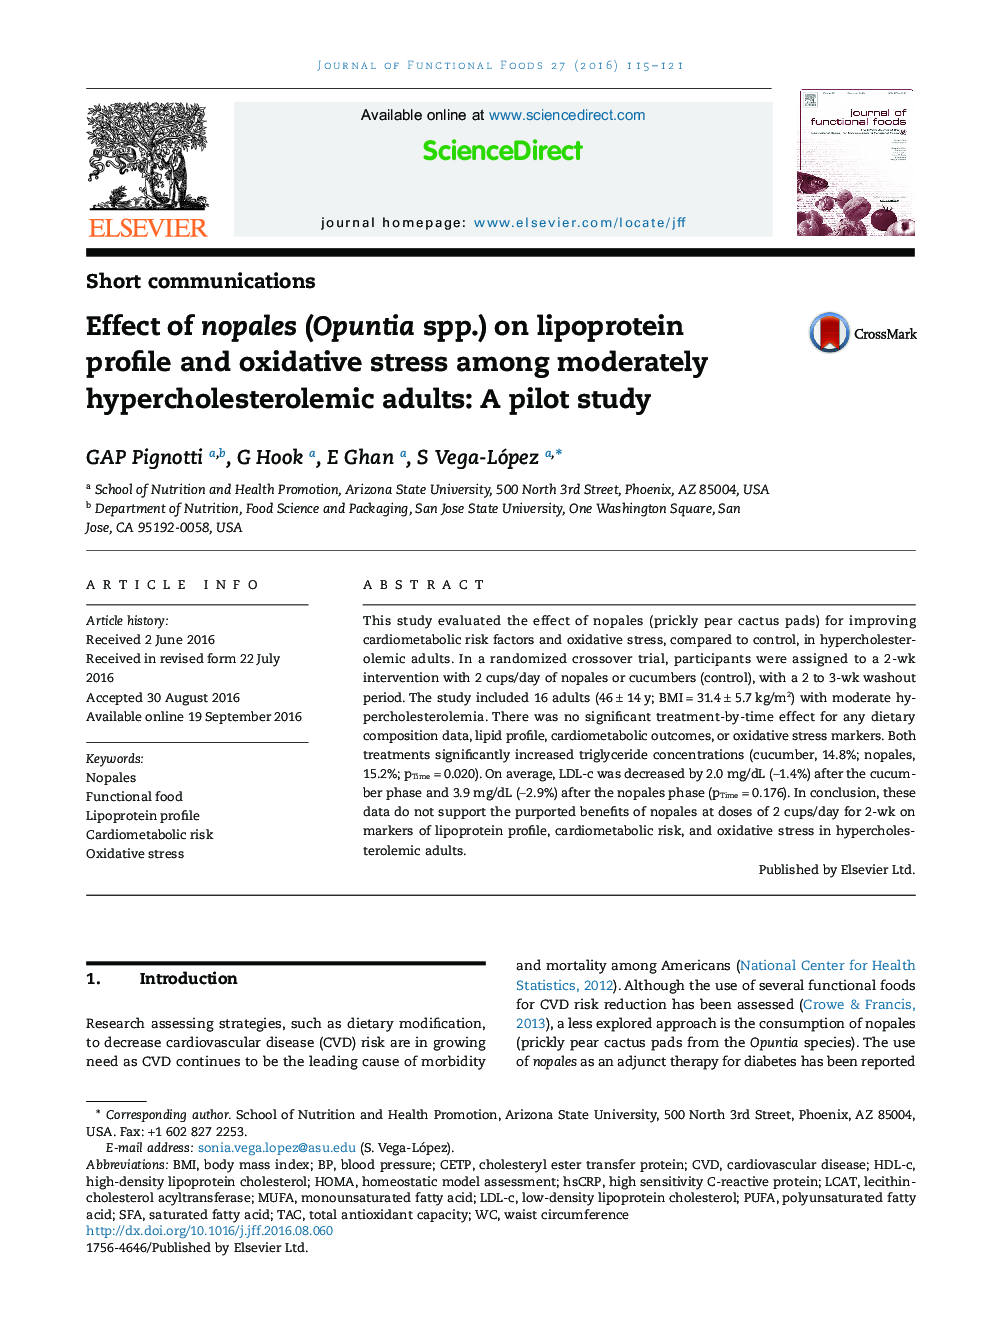 Short communicationsEffect of nopales (Opuntia spp.) on lipoprotein profile and oxidative stress among moderately hypercholesterolemic adults: A pilot study